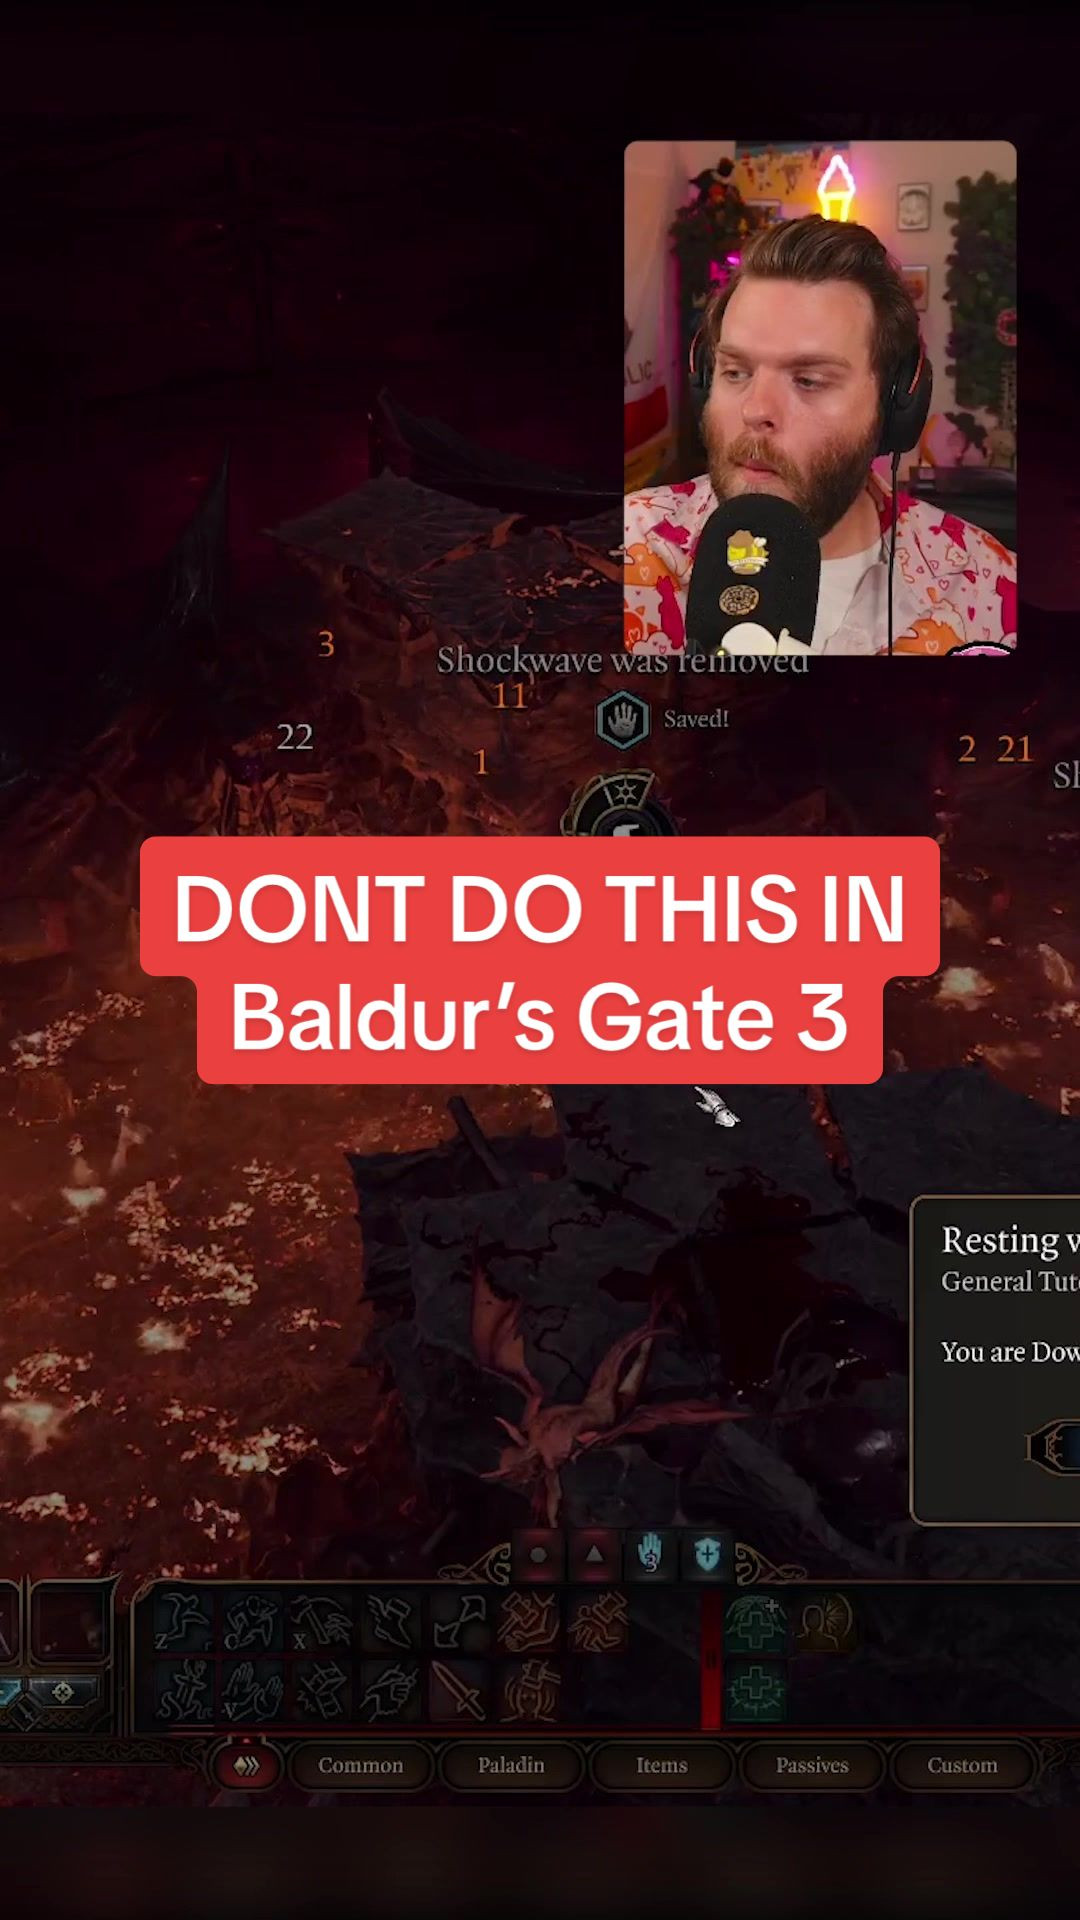 Baldur’s Gate 3 is right around the corner. Avoid the Nautiloid Tanks. 💀  #baldursgate3 #streamclips #robodessert #baldursgate 